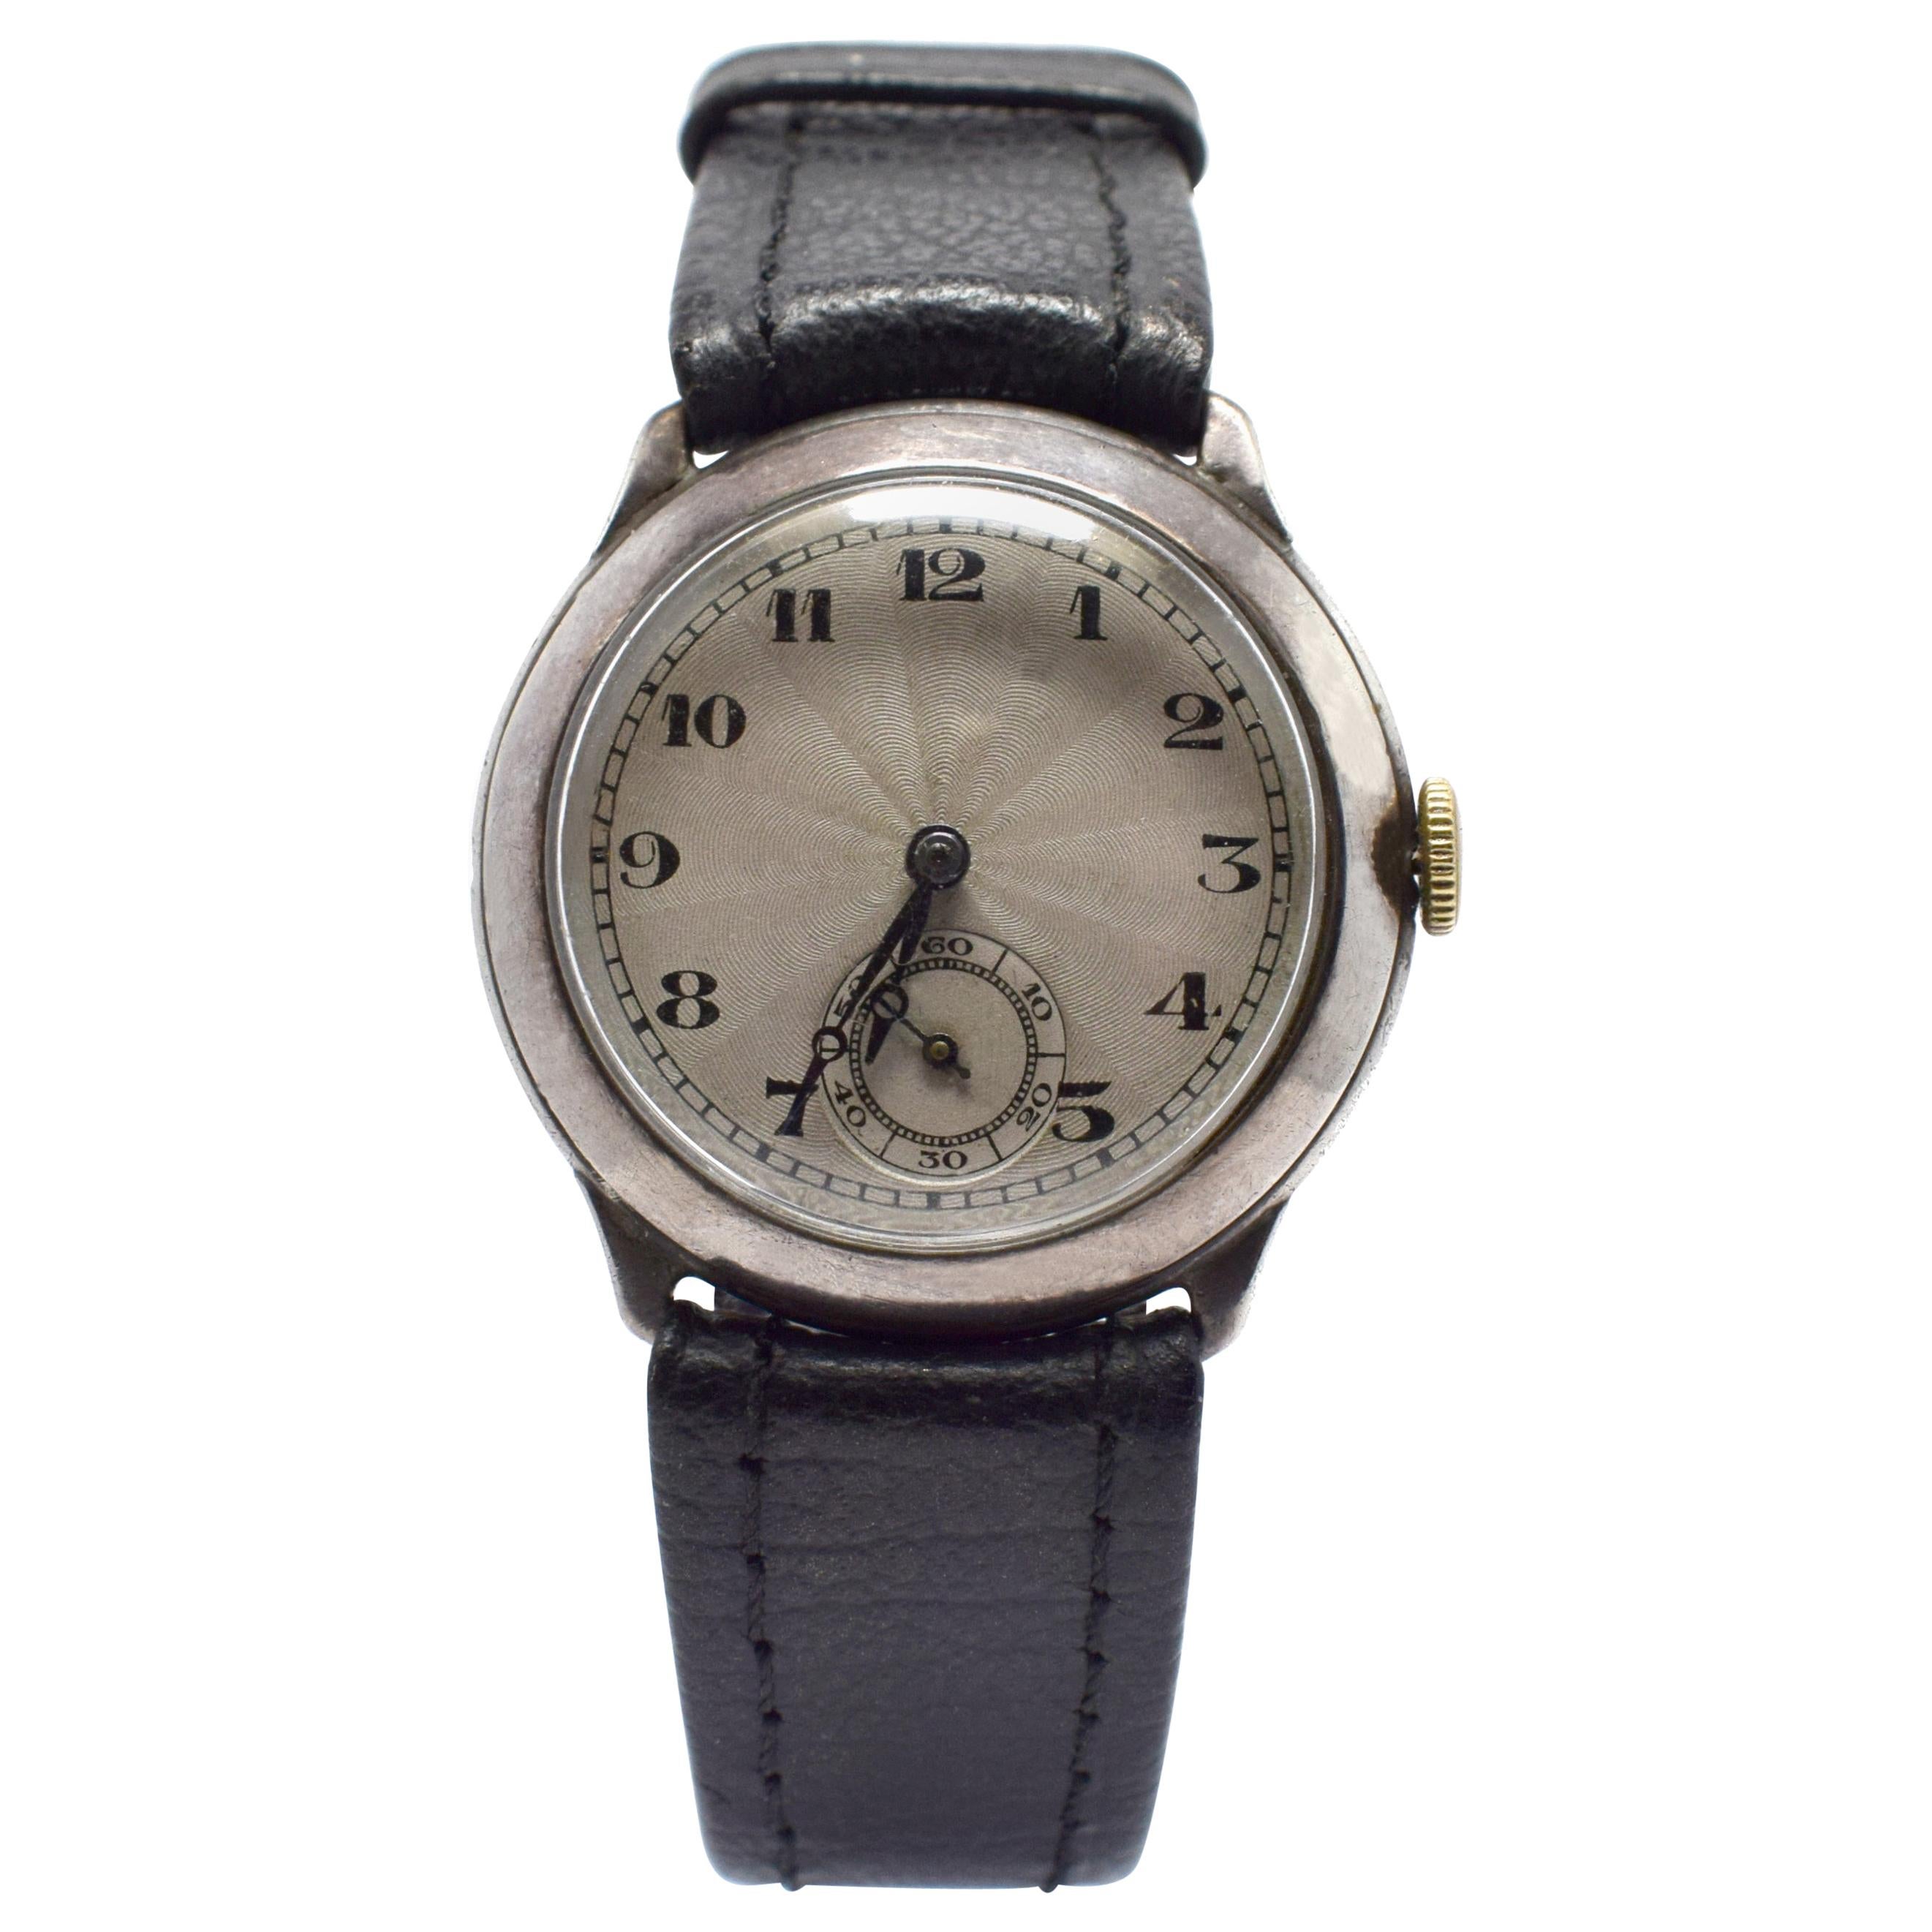 Art Deco 1930s Men's Manual Wristwatch